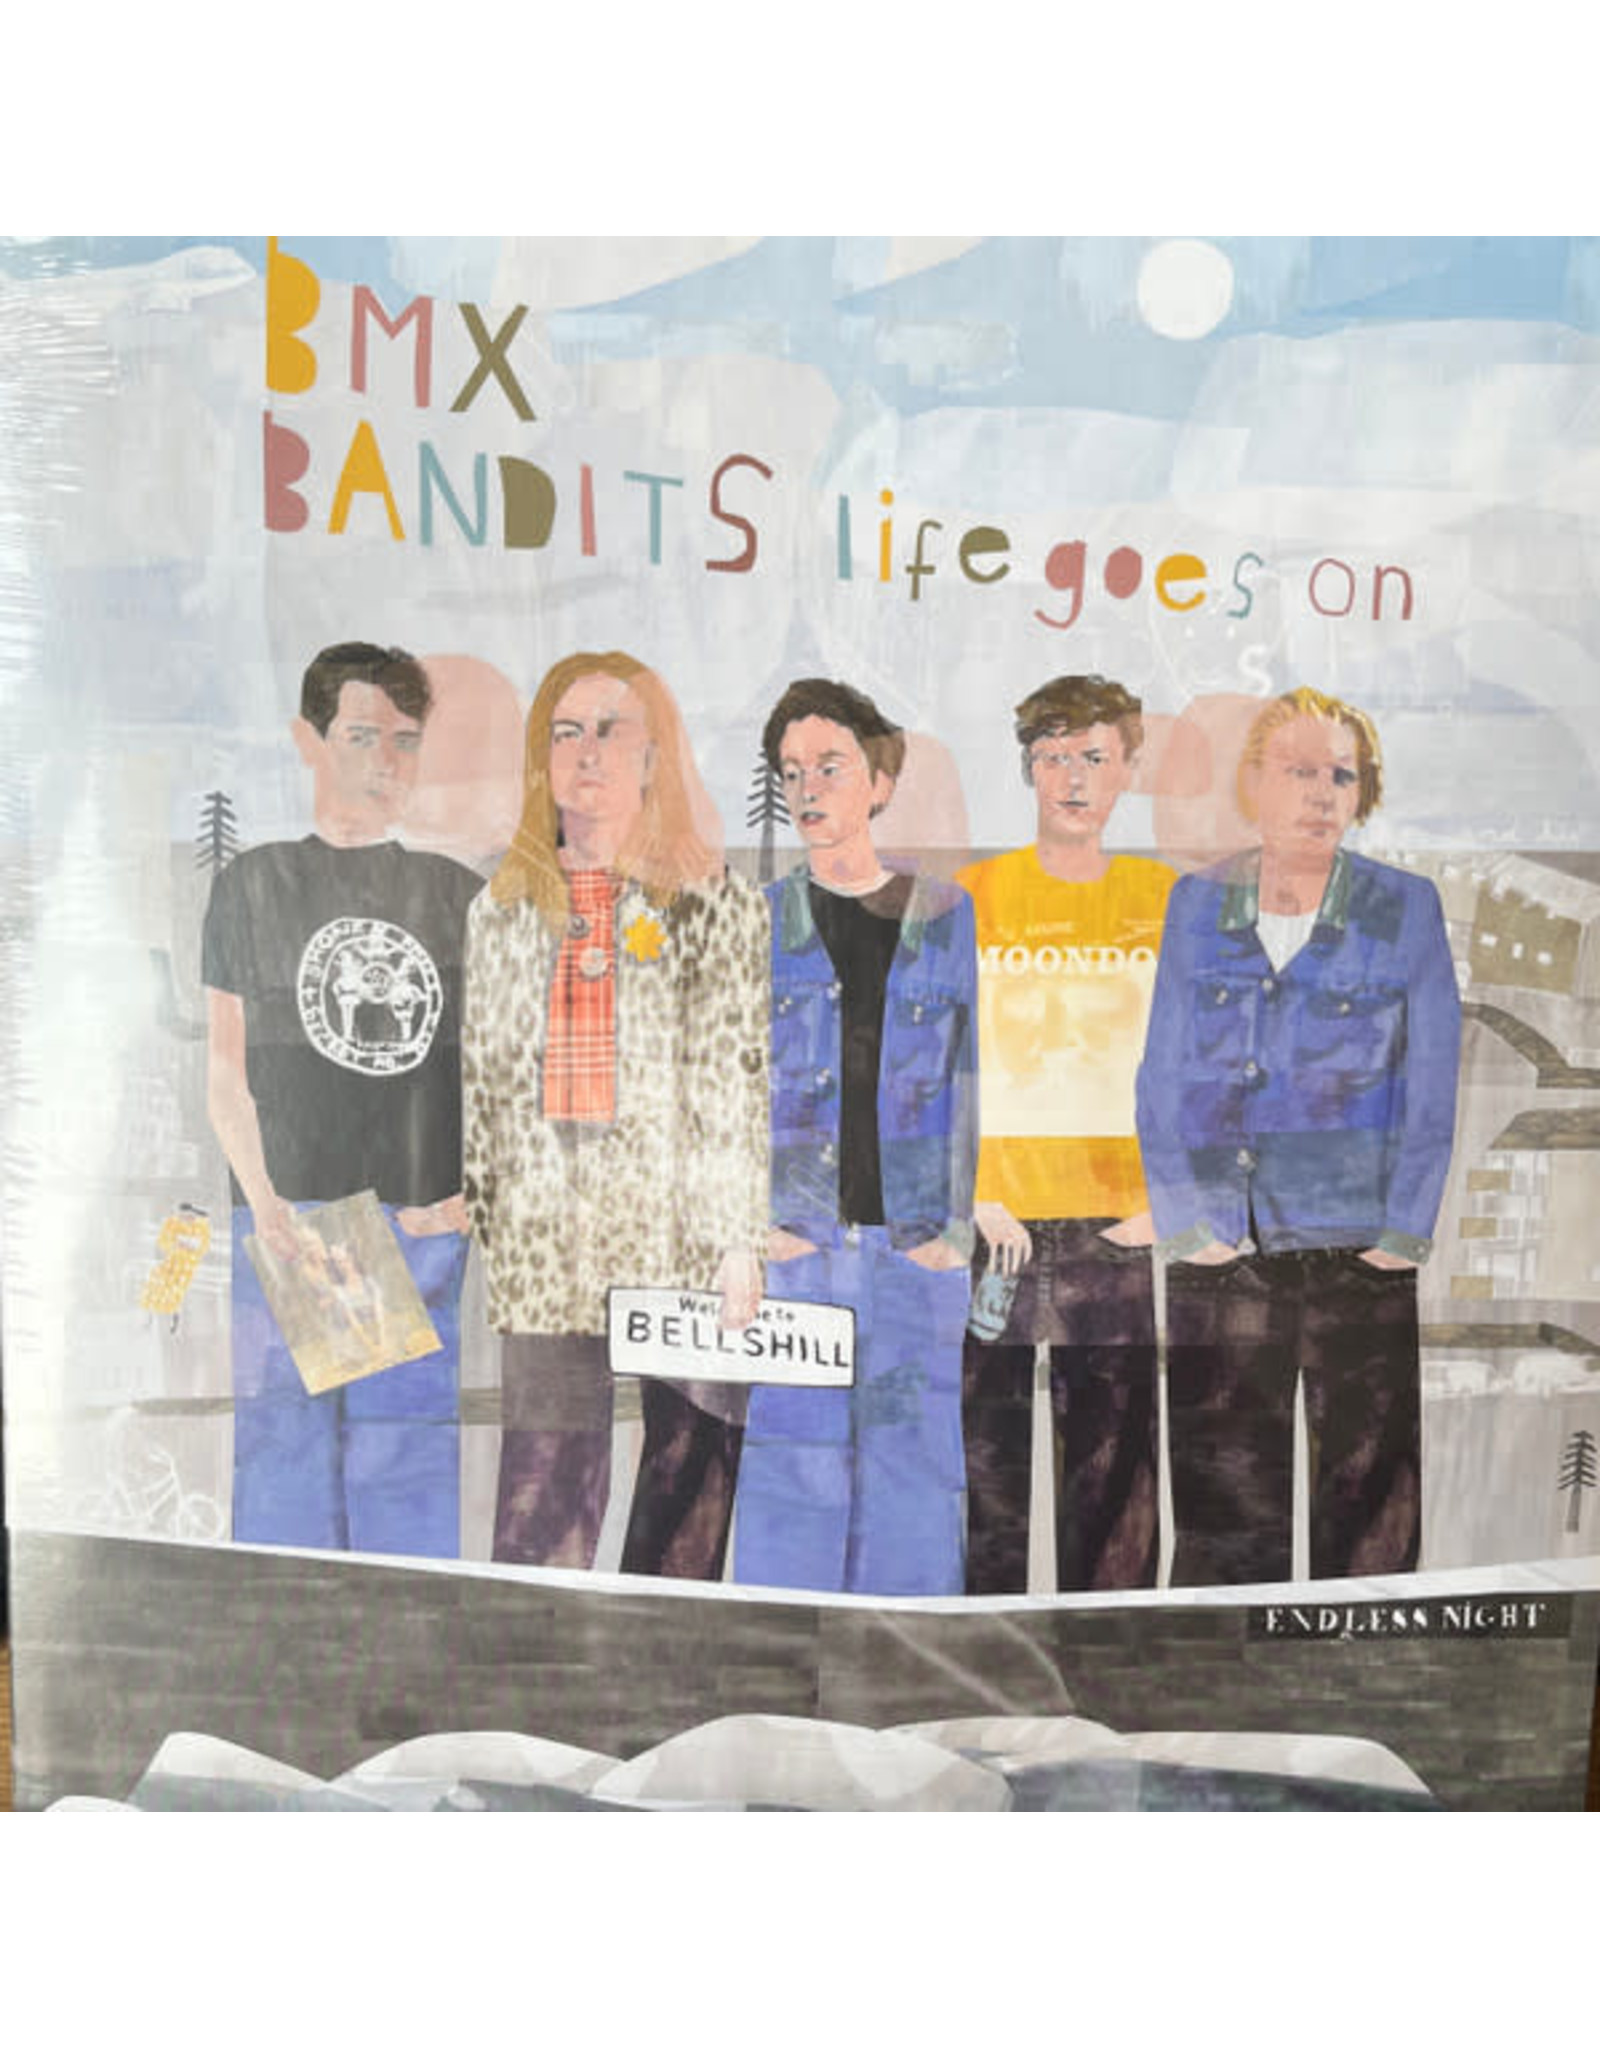 BMX Bandits - Life Goes On (Indie Green Vinyl) LP